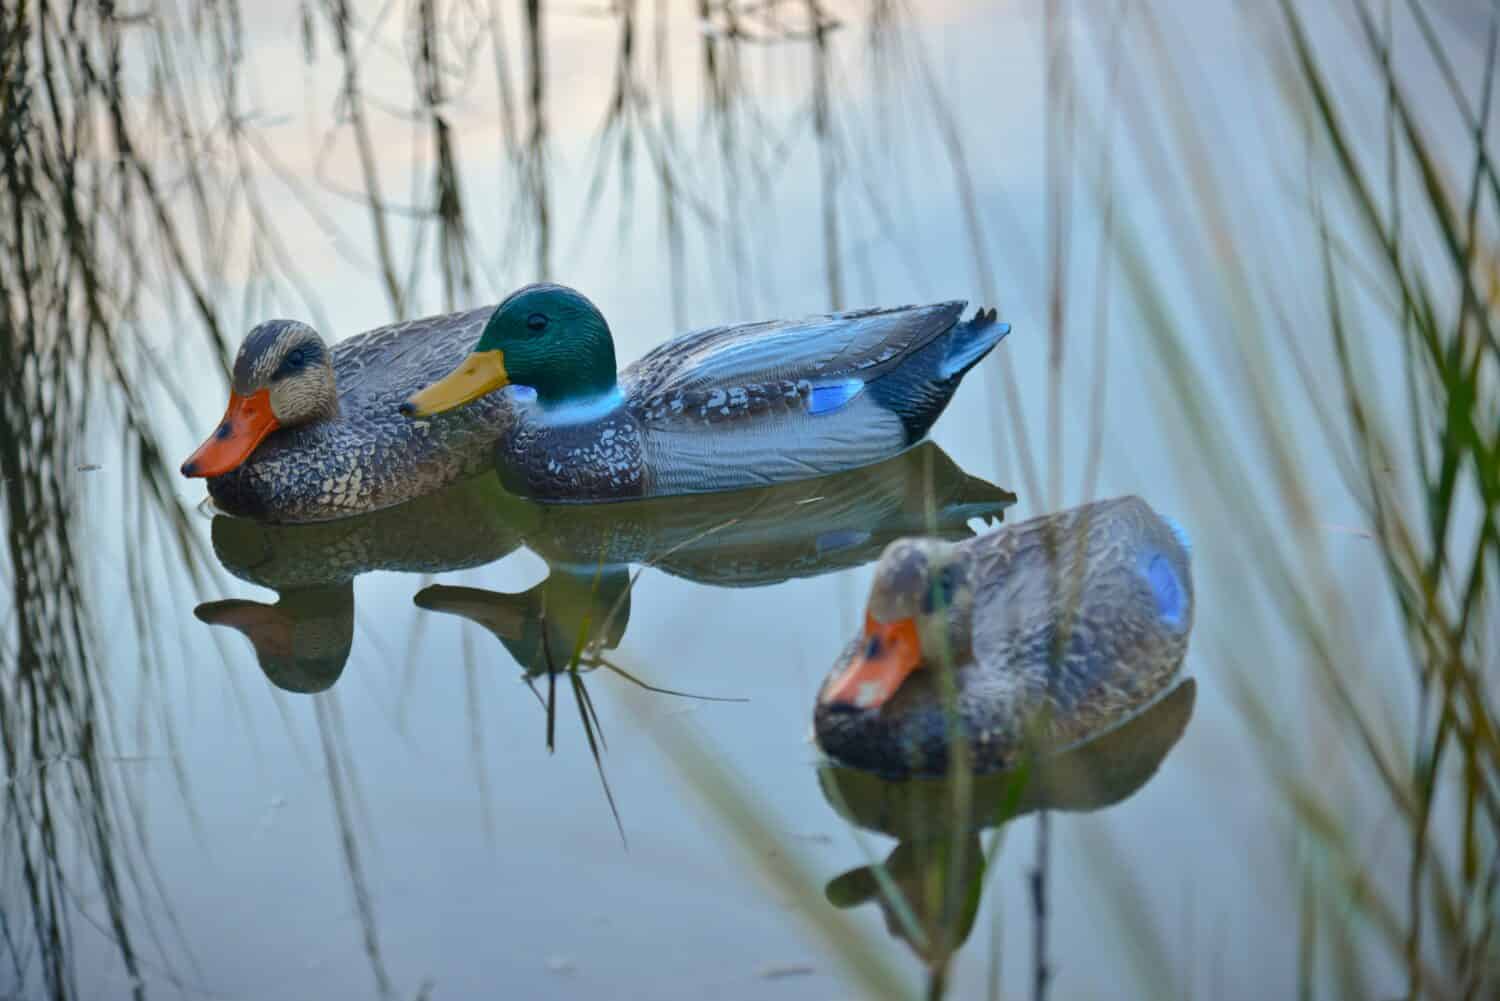 An up close shot of three ducks